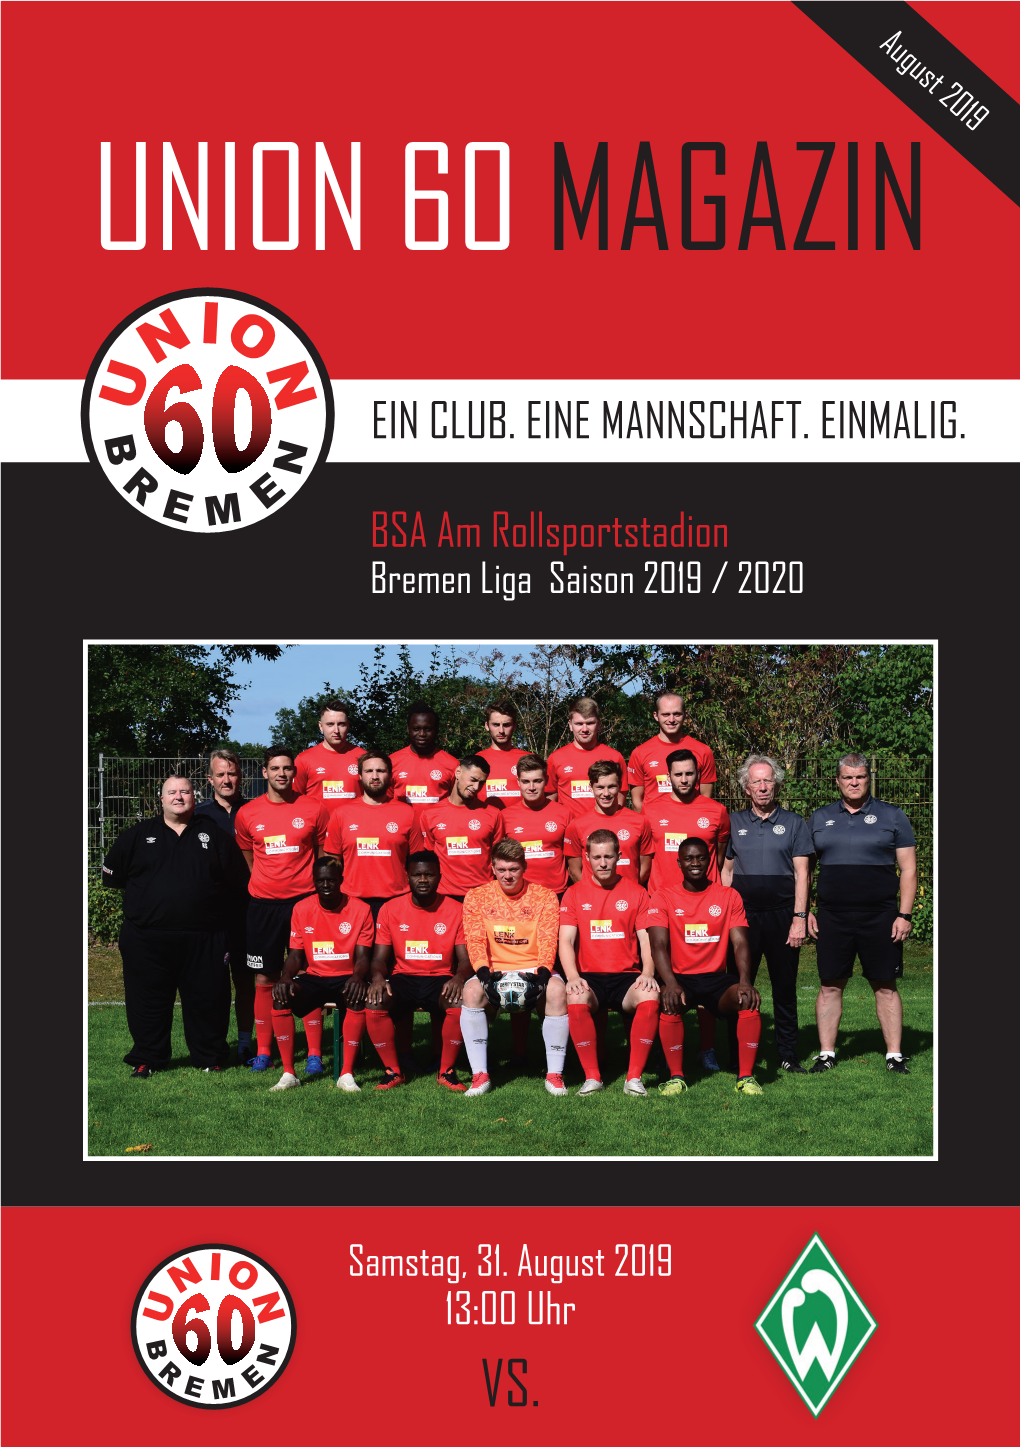 Union 60 Magazin